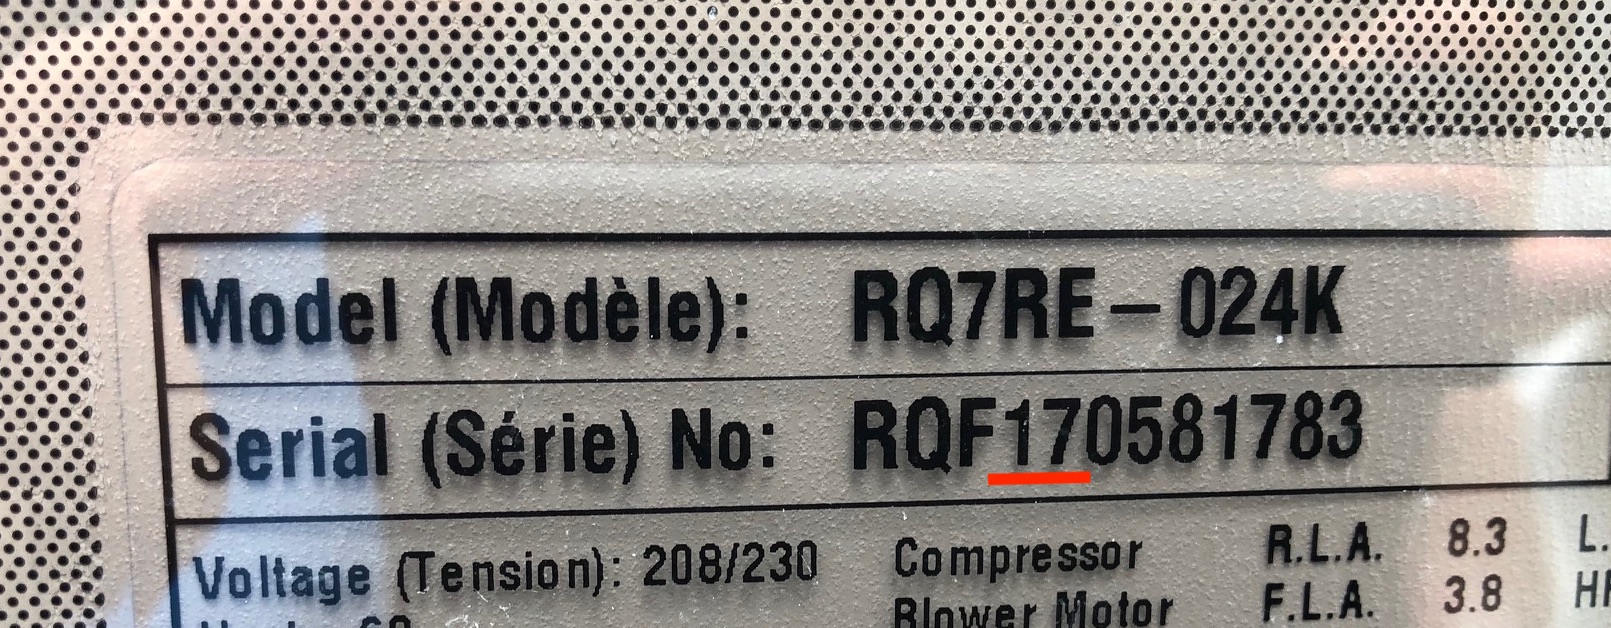 nordyn serial number nomenclature